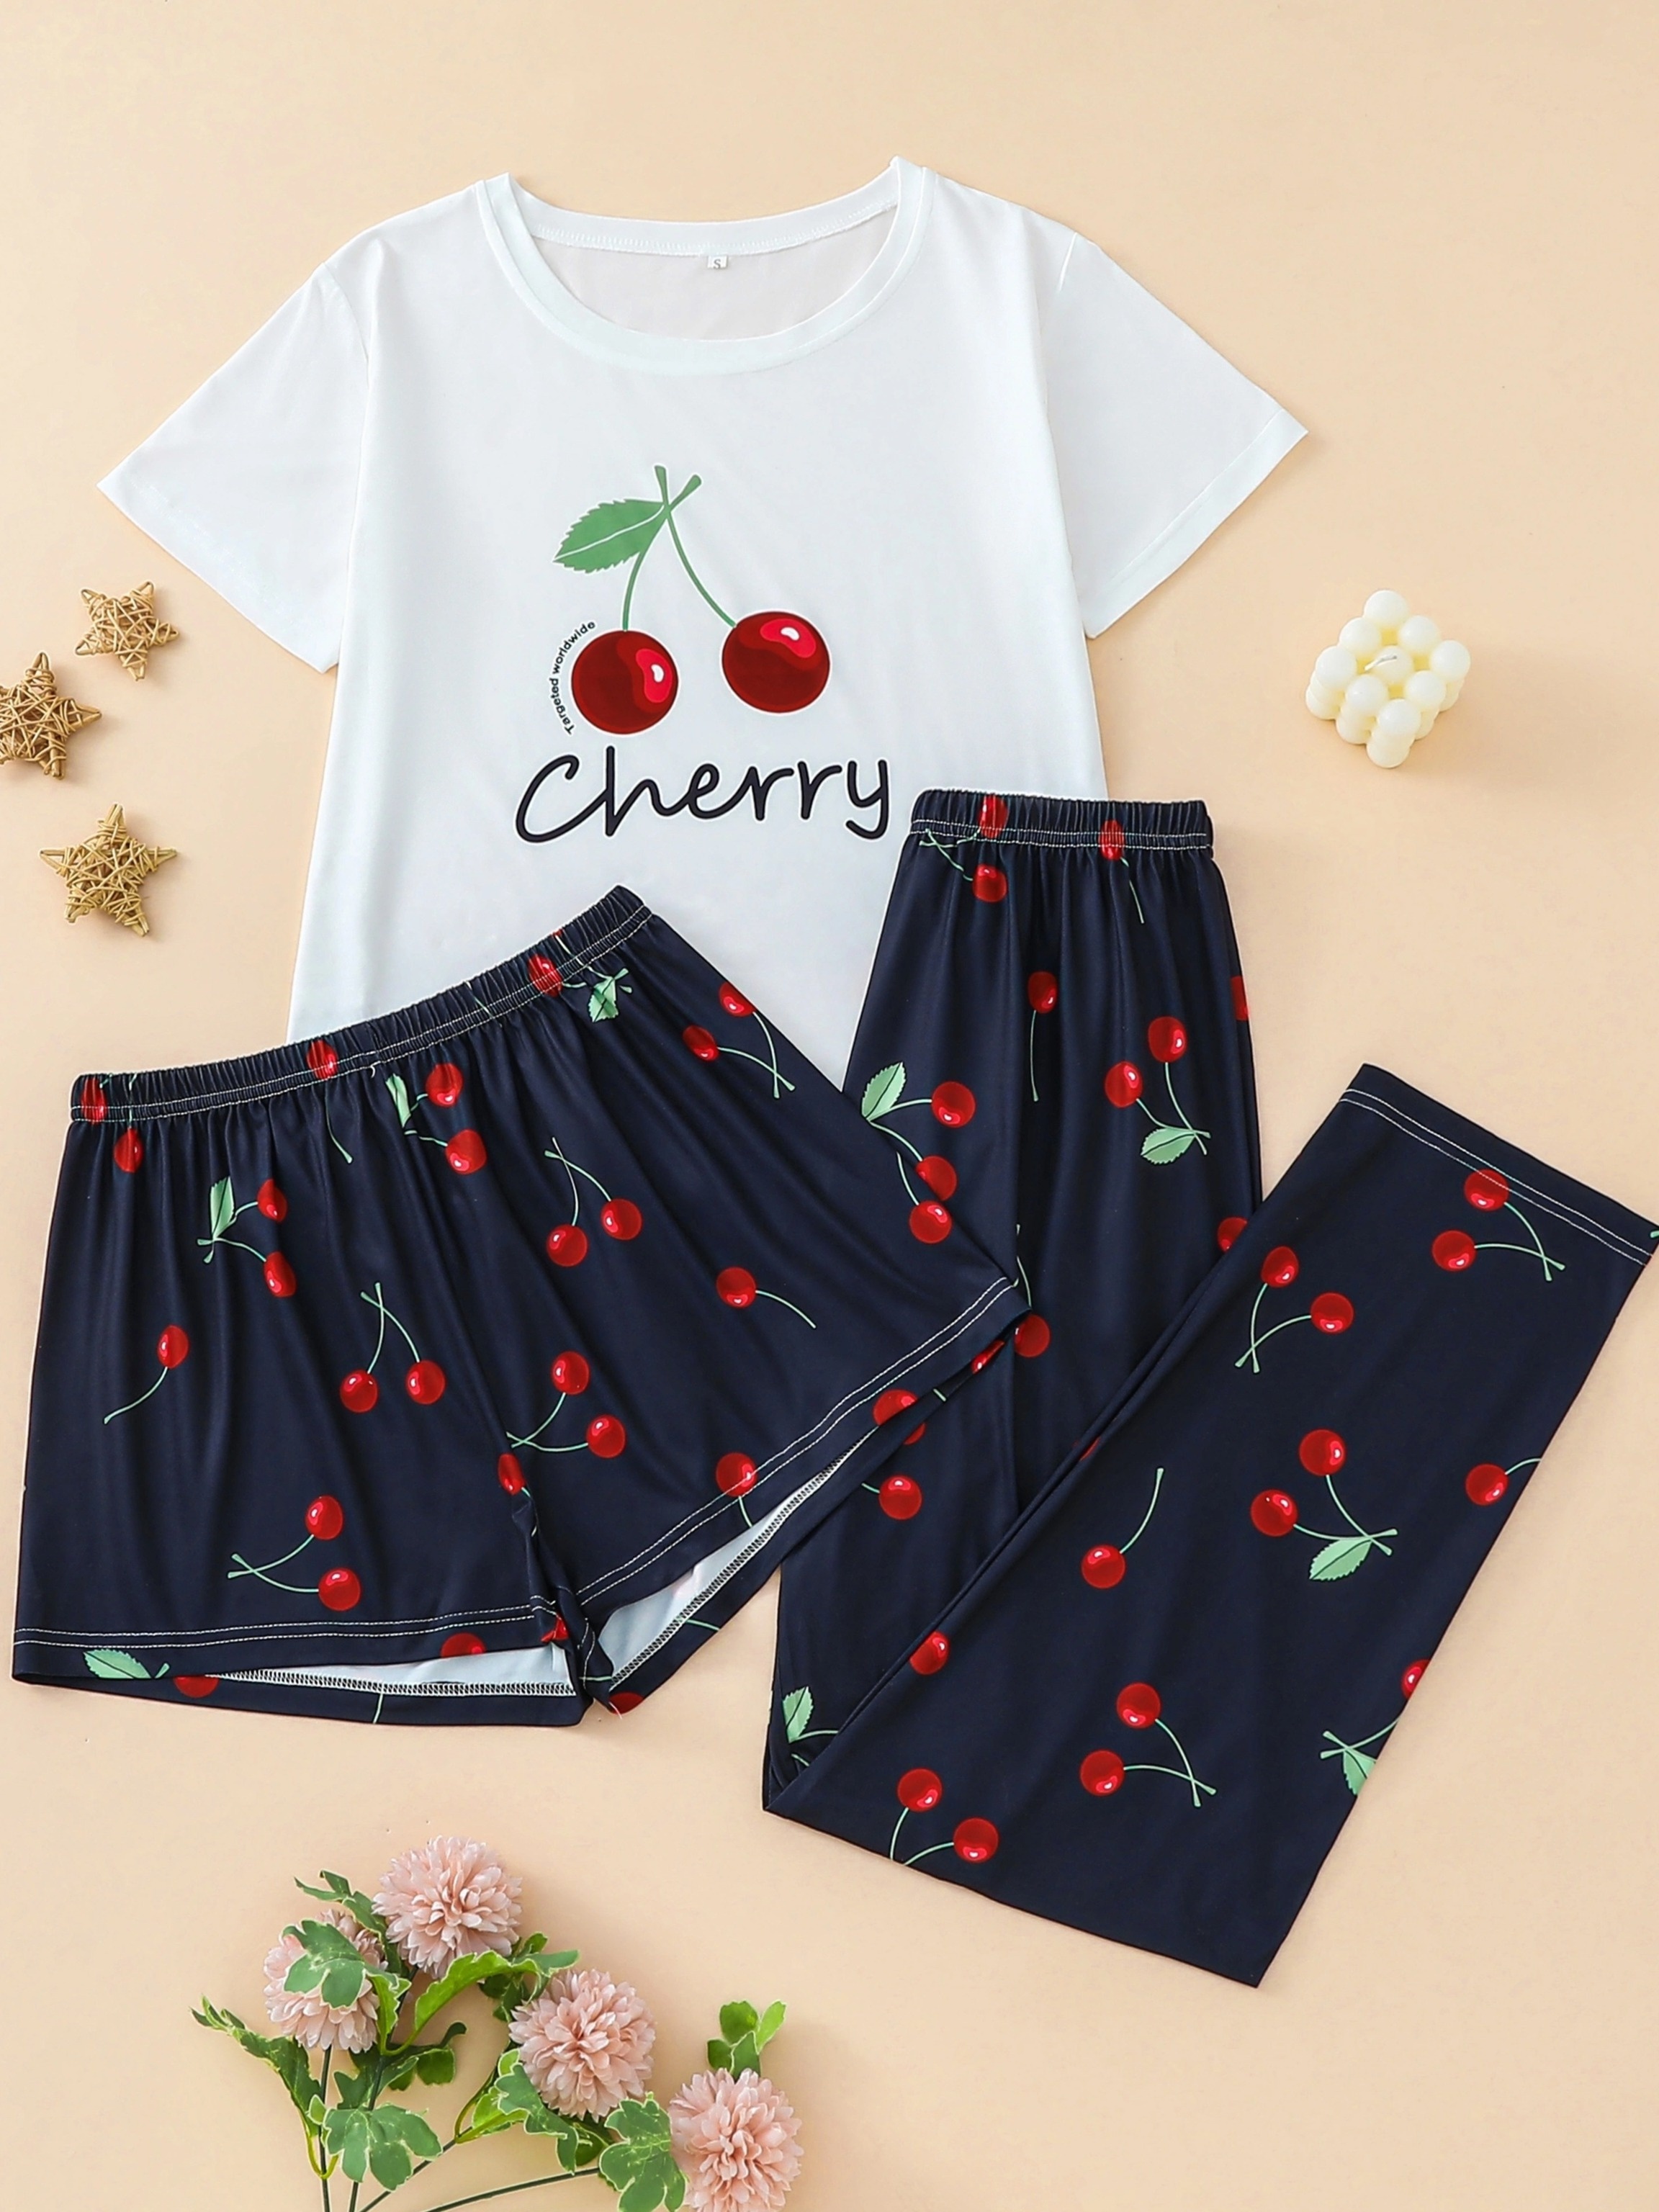 Wunderlove Sleepwear Cherry Red Chill Printed T-Shirt – Cherrypick